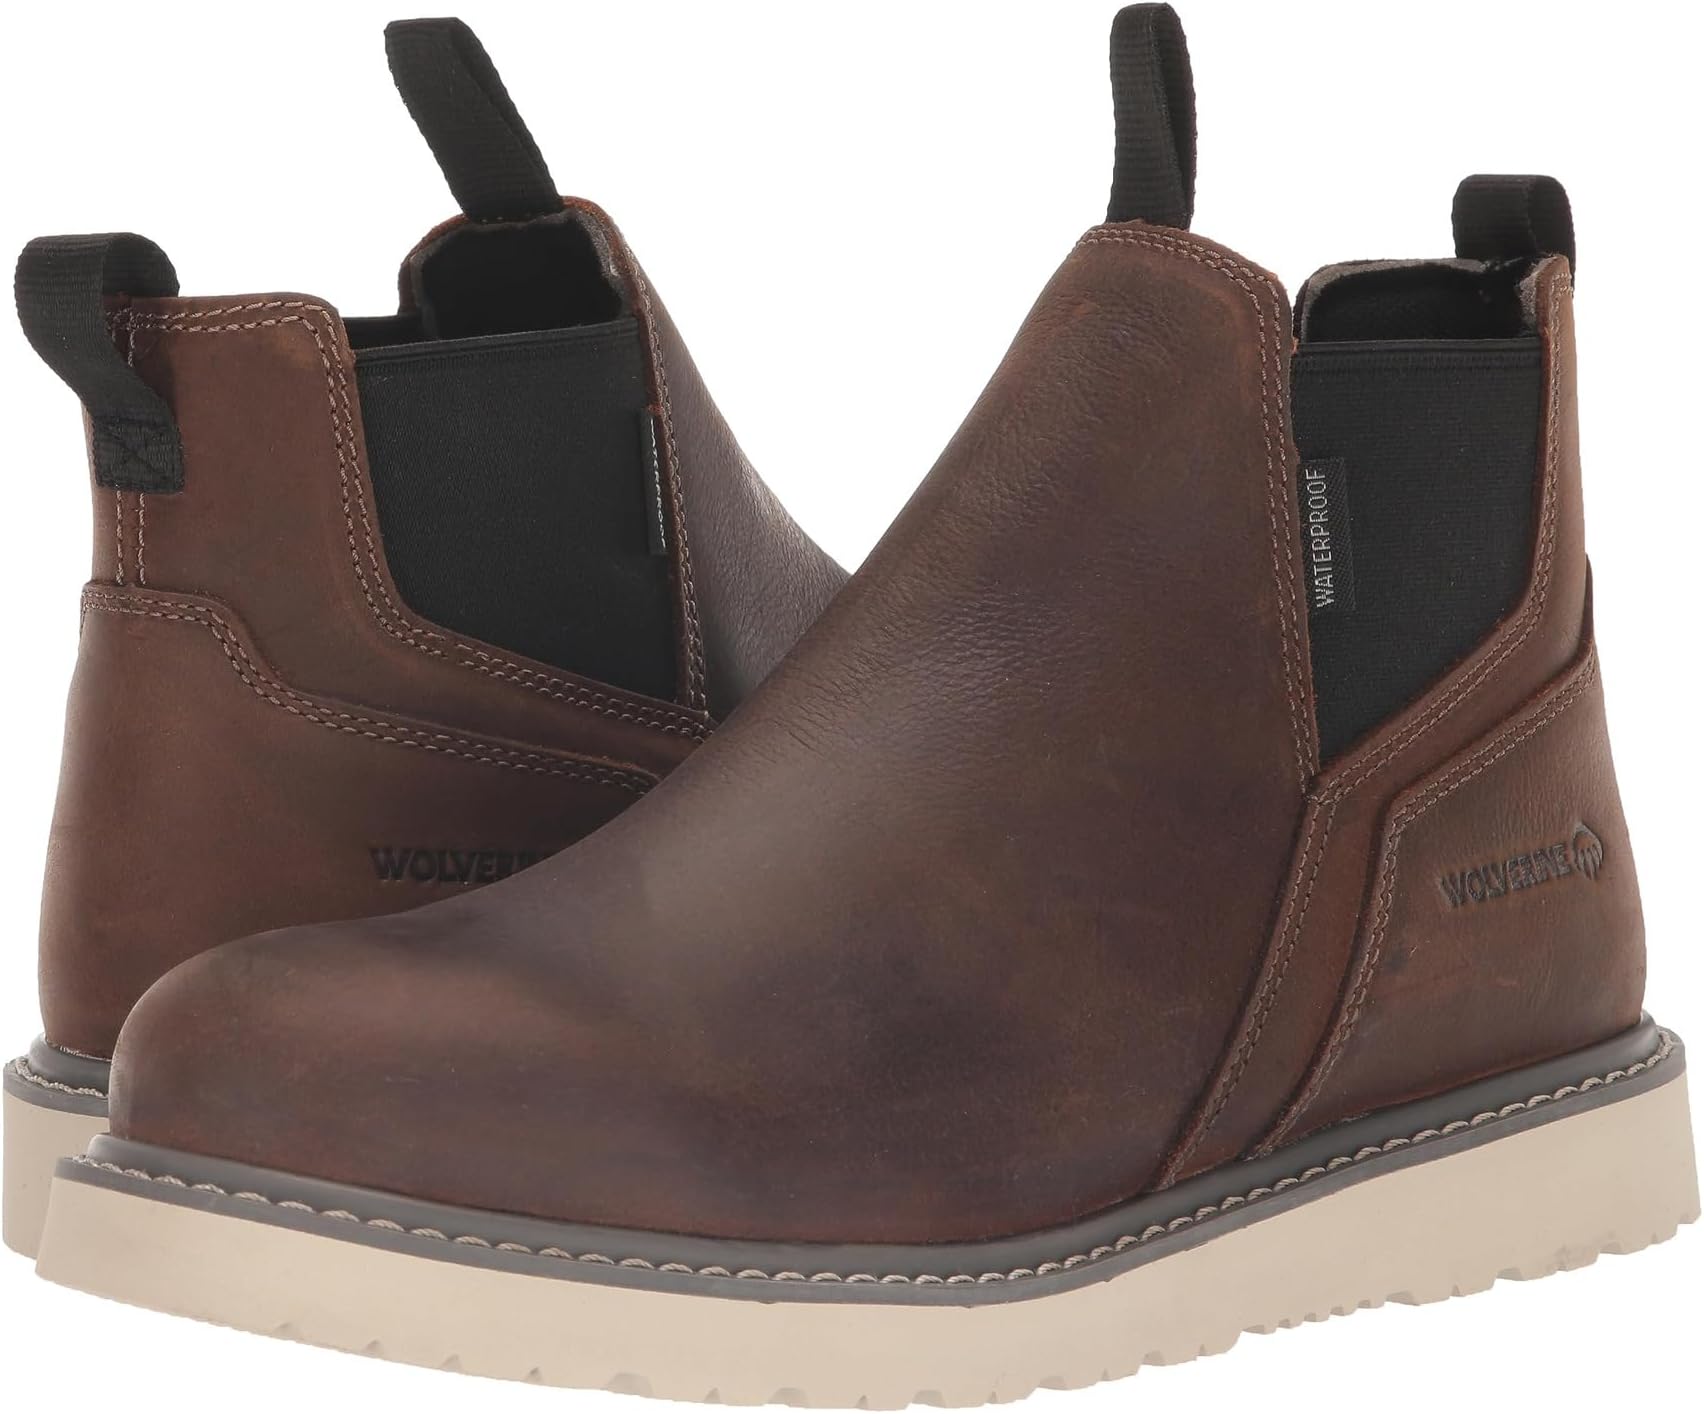 Рабочая обувь водонепроницаемая Trade Wedge Waterproof Romeo Wolverine, цвет Sudan Brown